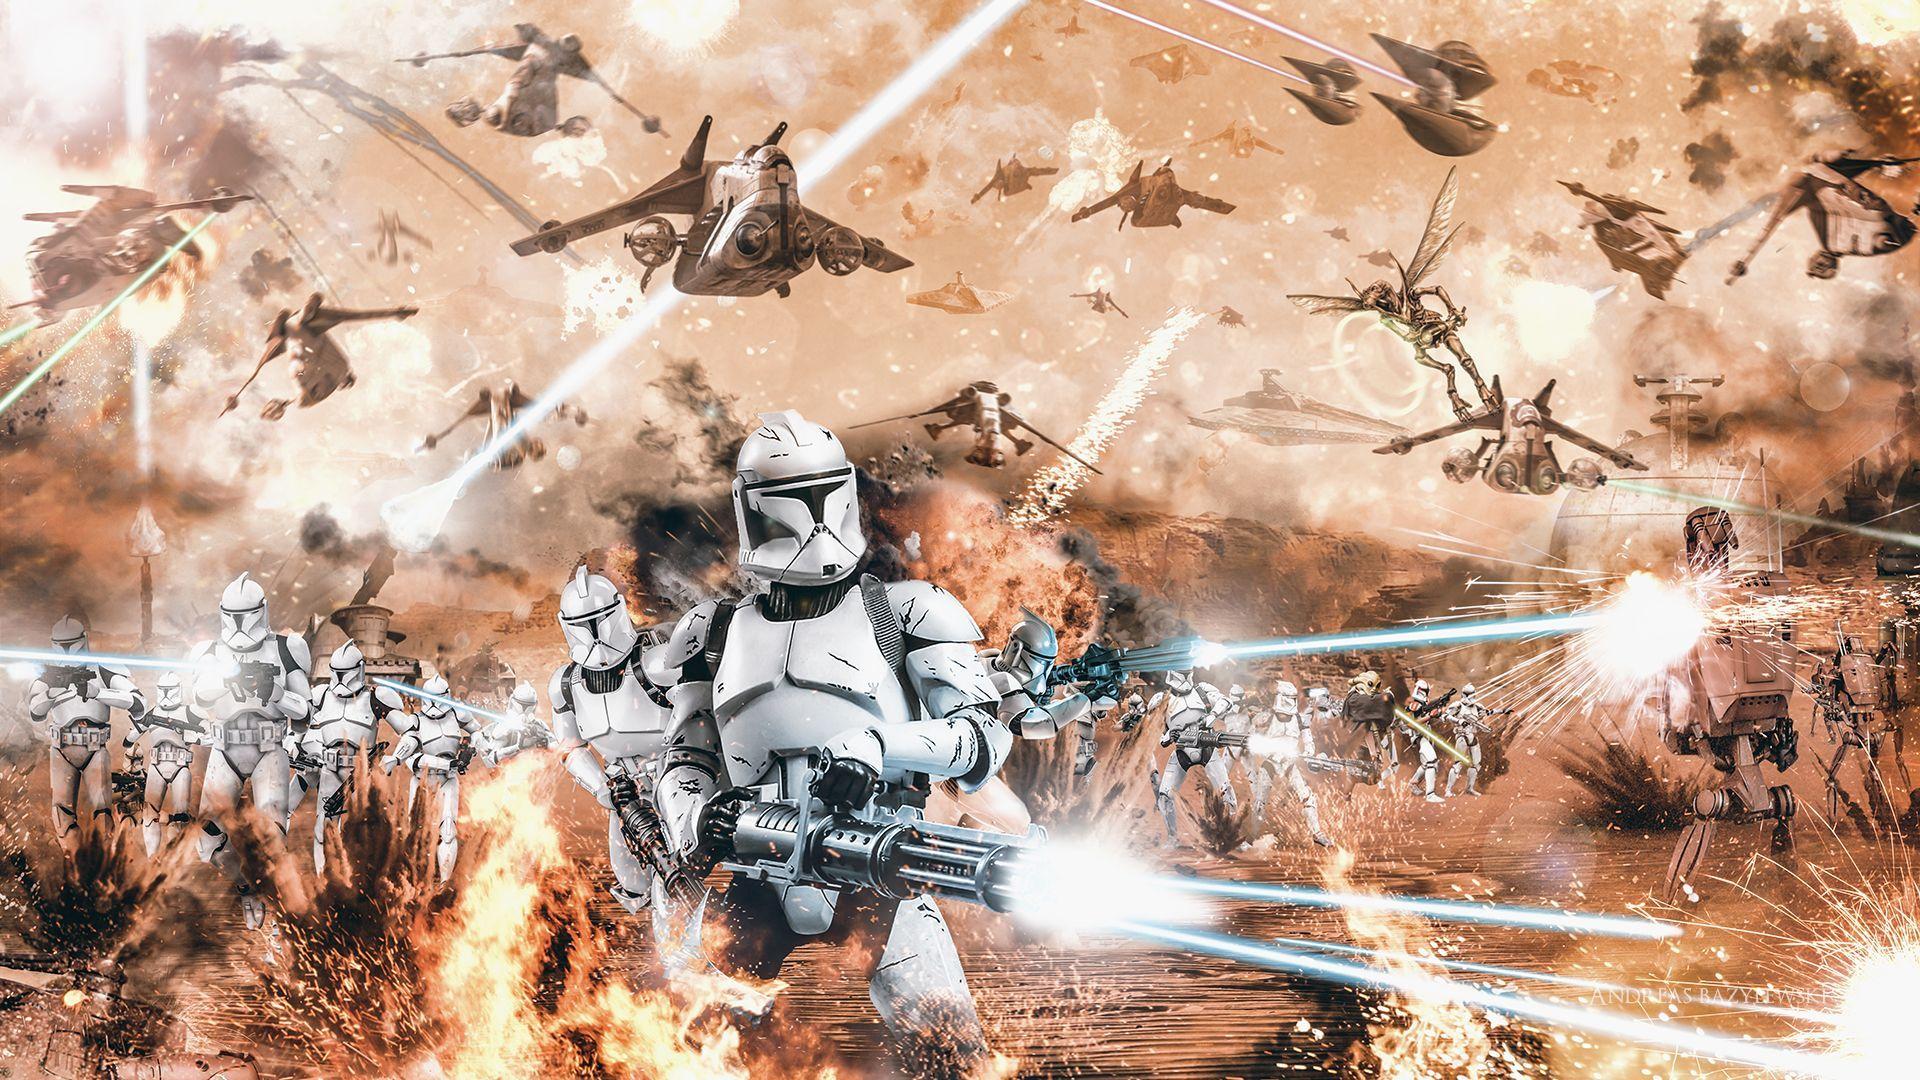 Star Wars Clone Trooper Wallpaper Wallpaper. Star wars picture, Star wars episode ii, Star wars wallpaper